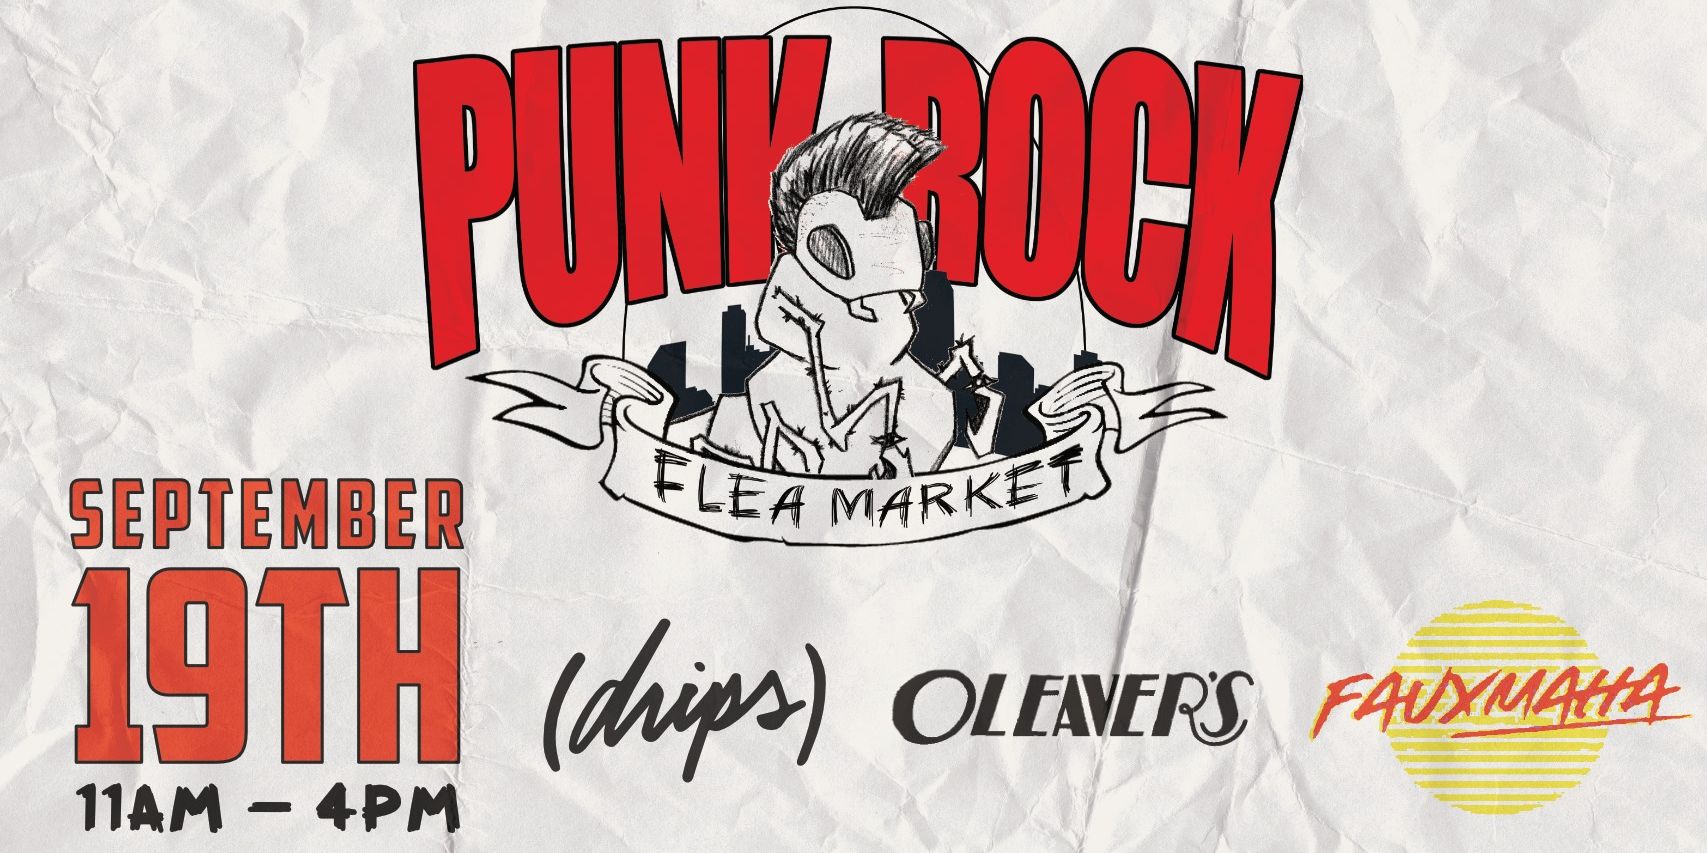 Omaha Punk Rock Flea Market - Fall Edition promotional image